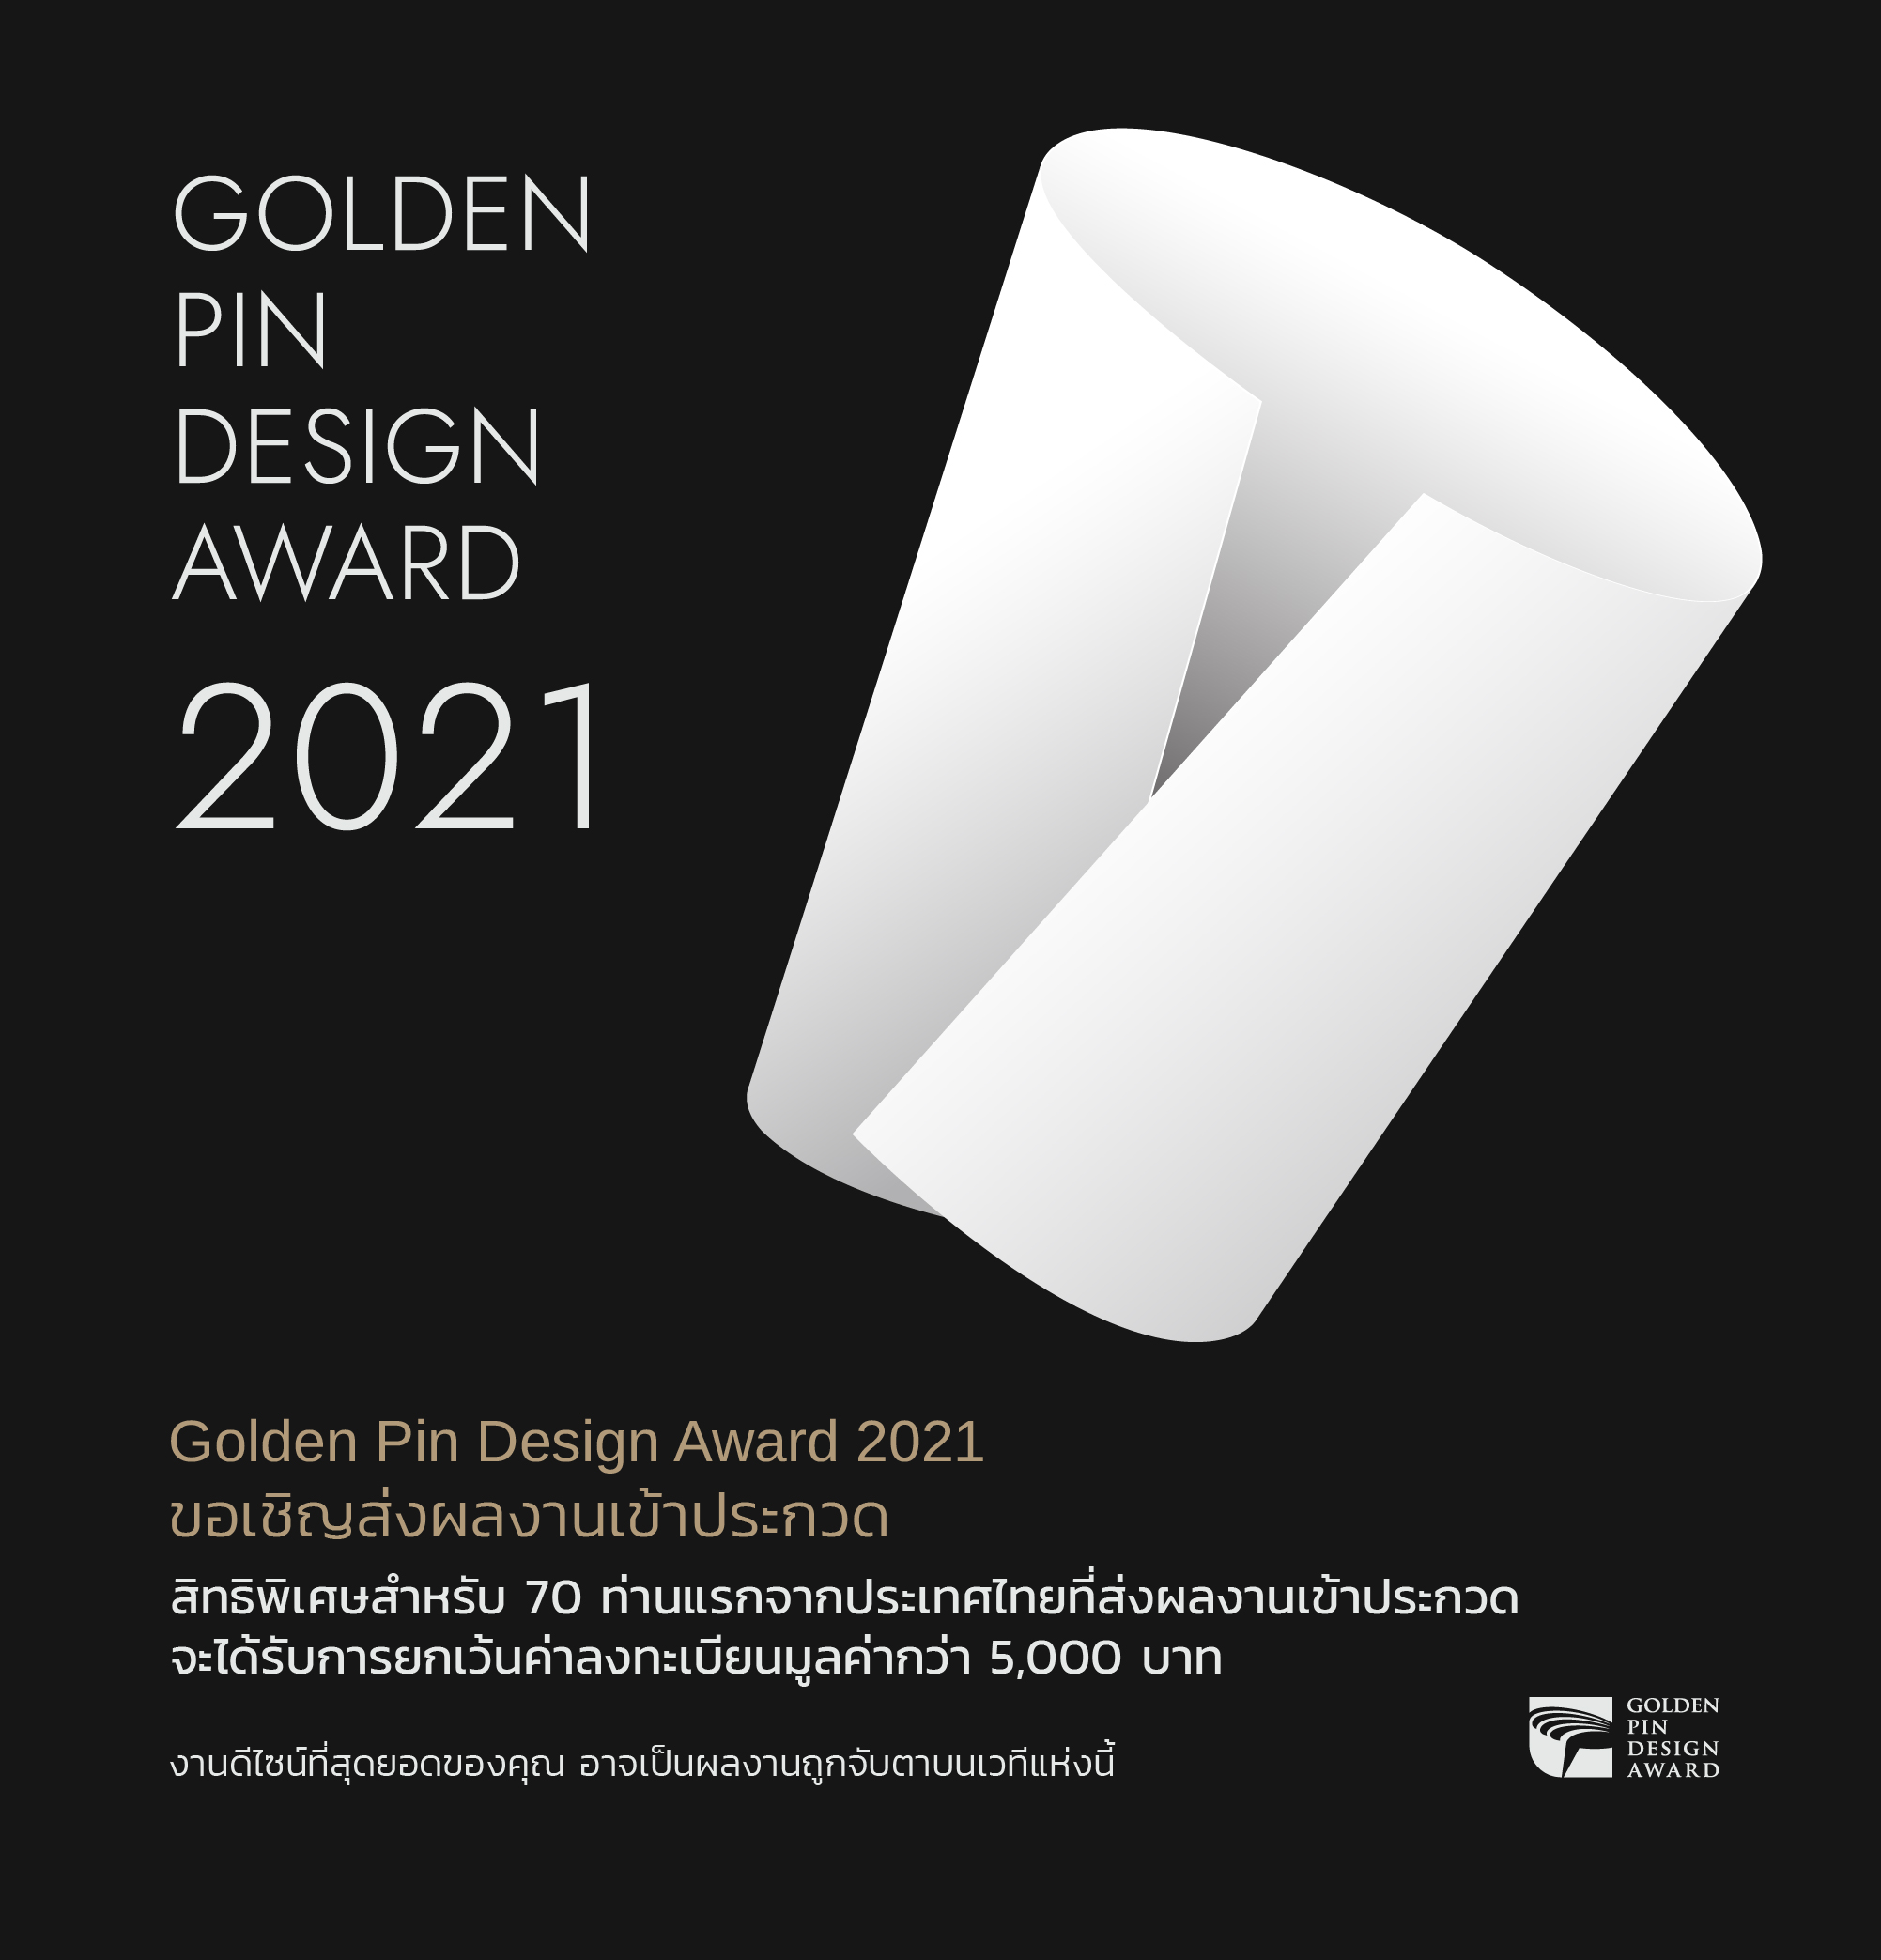 Golden Pin Design Award 2021 